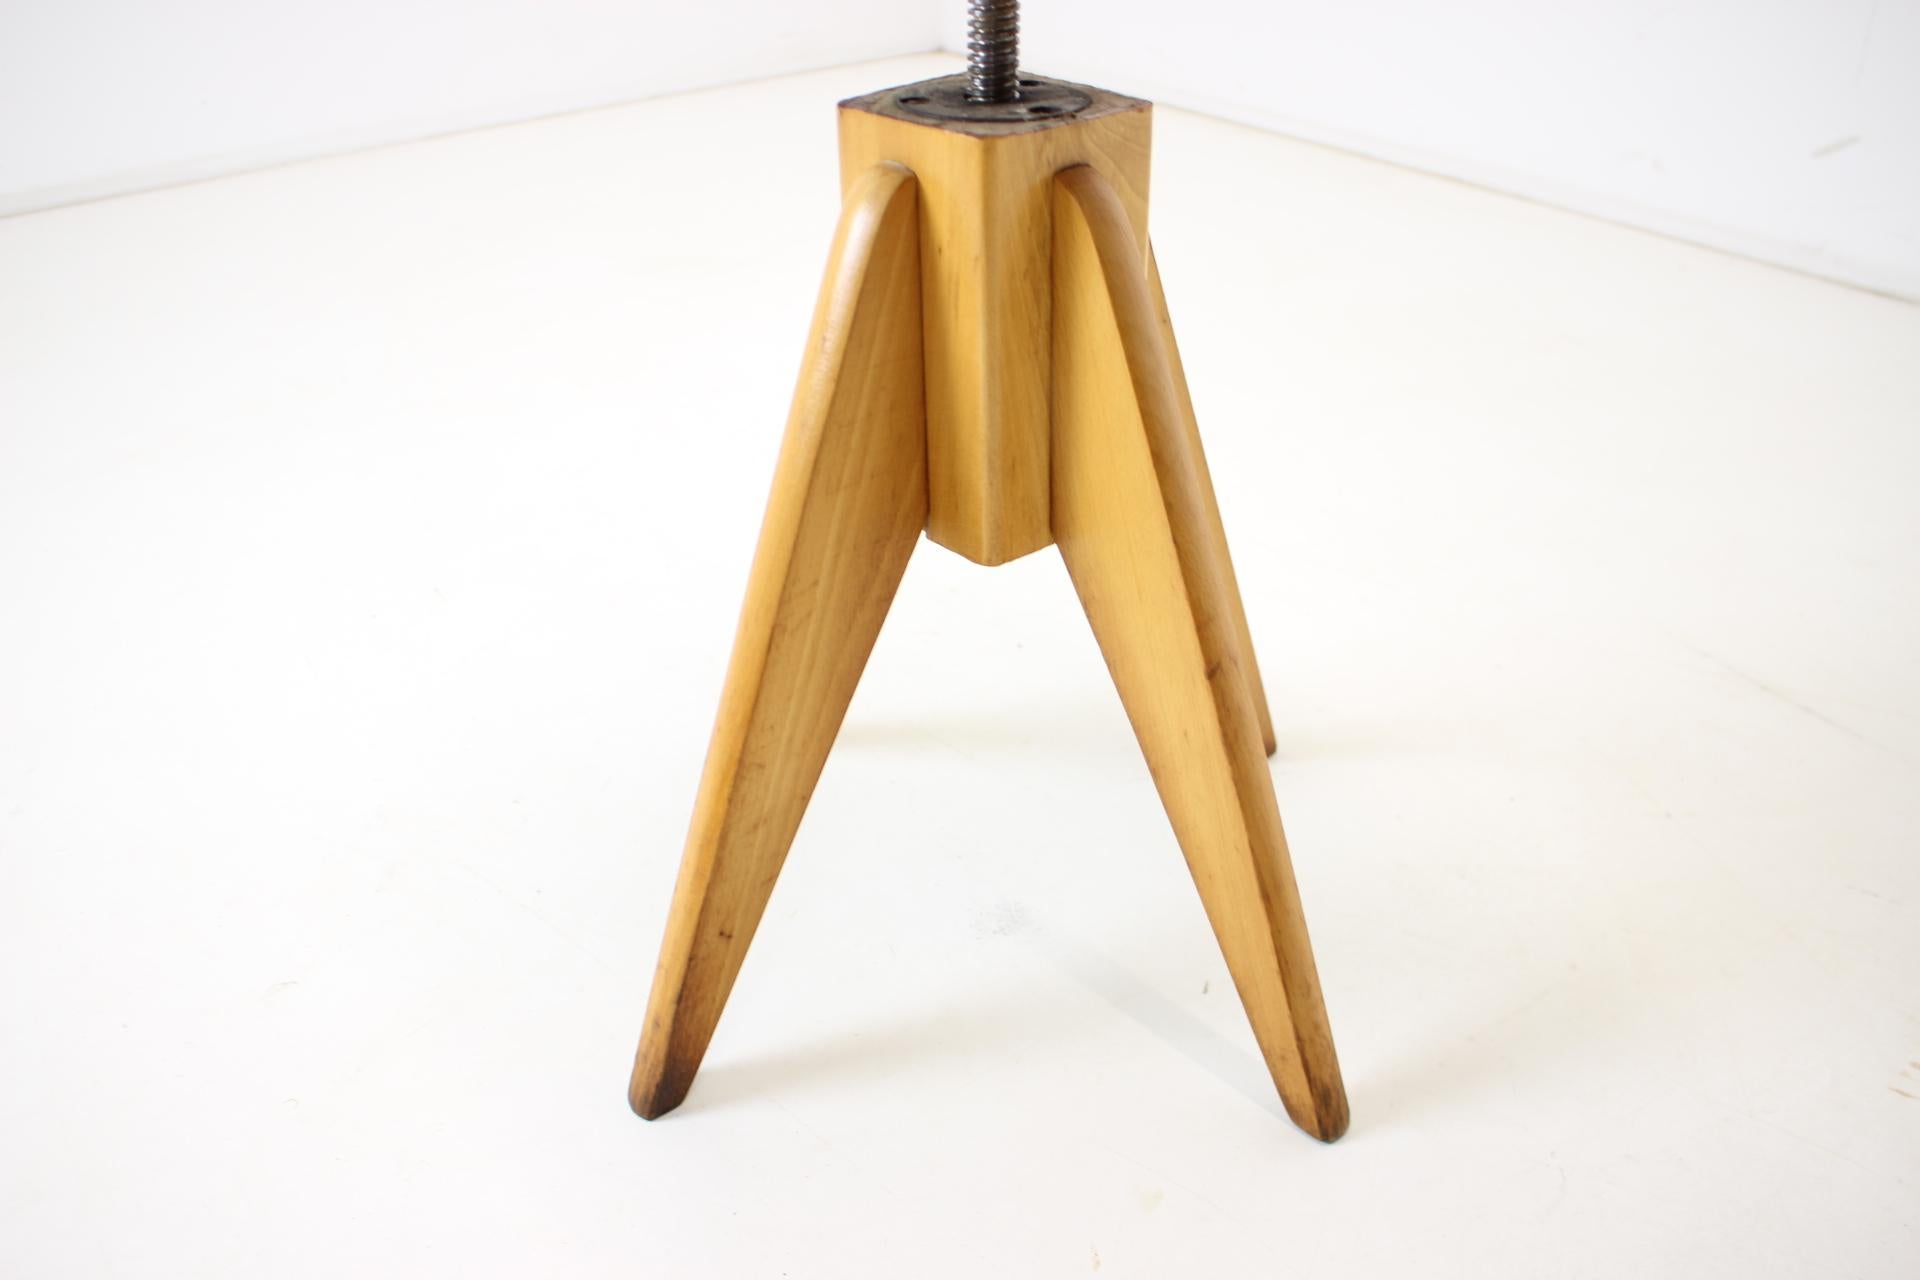 Midcentury Wood Revolving Chair, Czechoslovakia, 1970s For Sale 7